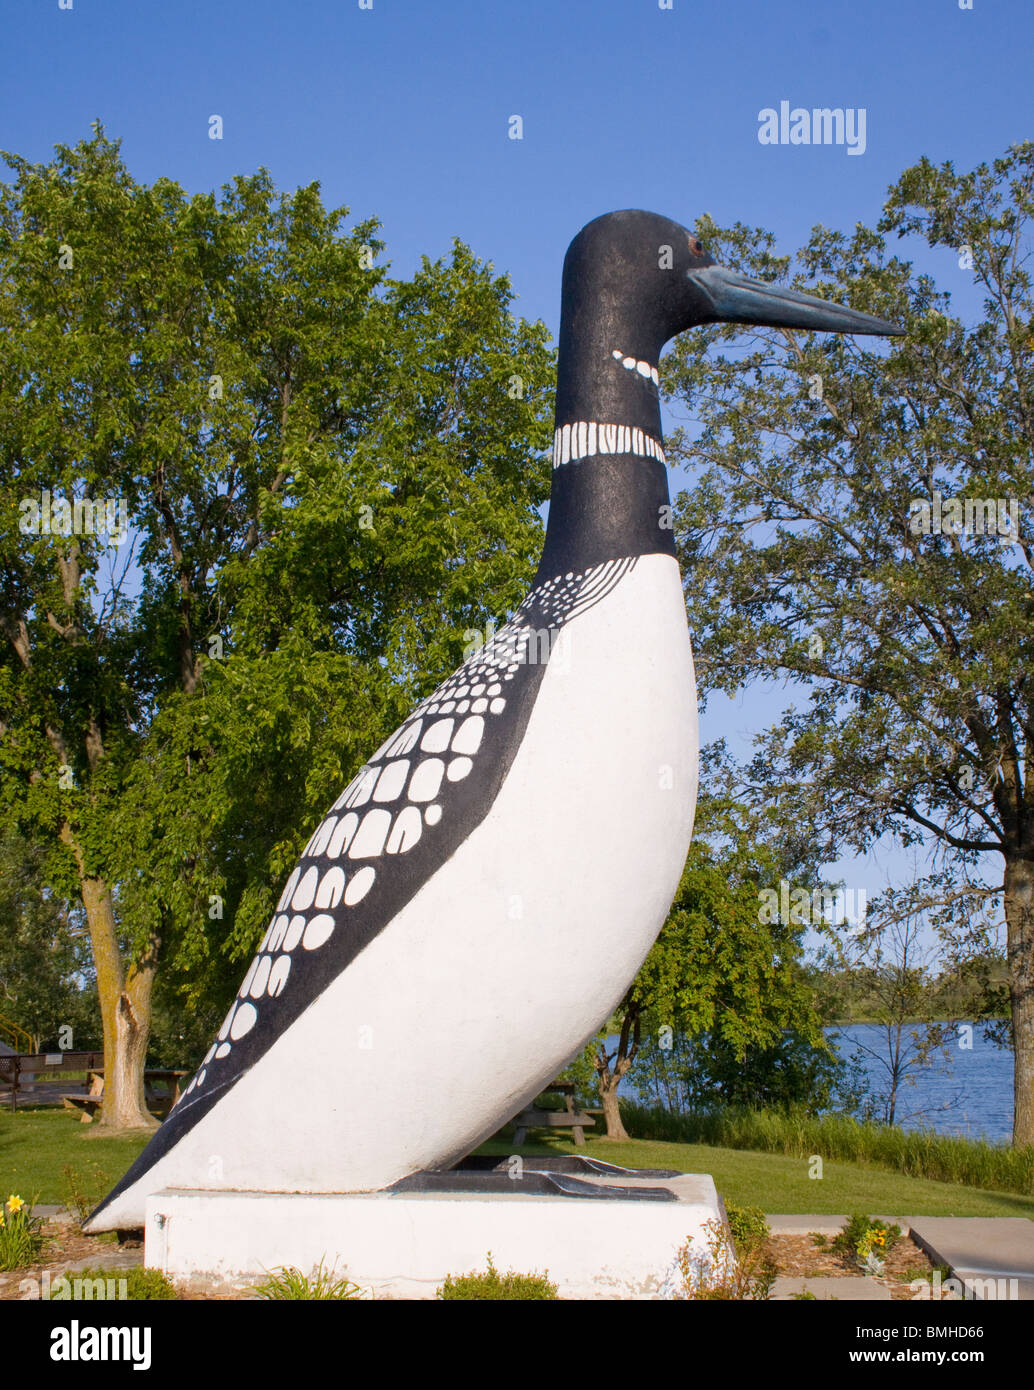 Loon gigante in Vergas Minnesota Foto Stock